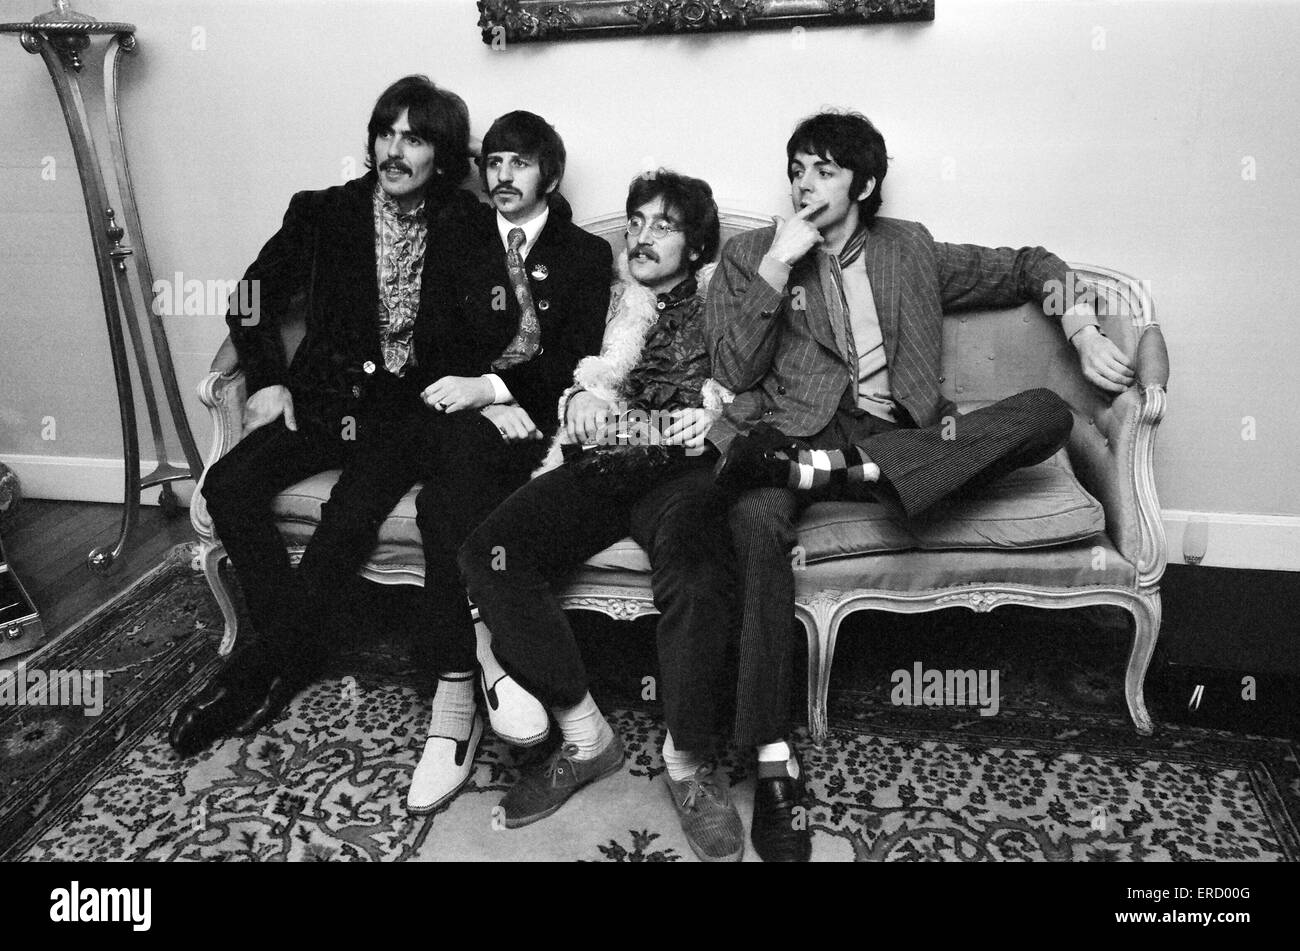 Die Beatles, drücken Sie Start des neuen Albums, "Sgt. Peppers Lonely Hearts Club Band" ihr achtes Studioalbum im Salon am 24 Chapel Street, Belgravia London, 19. Mai 1967. John Lennon, Paul McCartney, George Harrison, Ringo Starr. Stockfoto